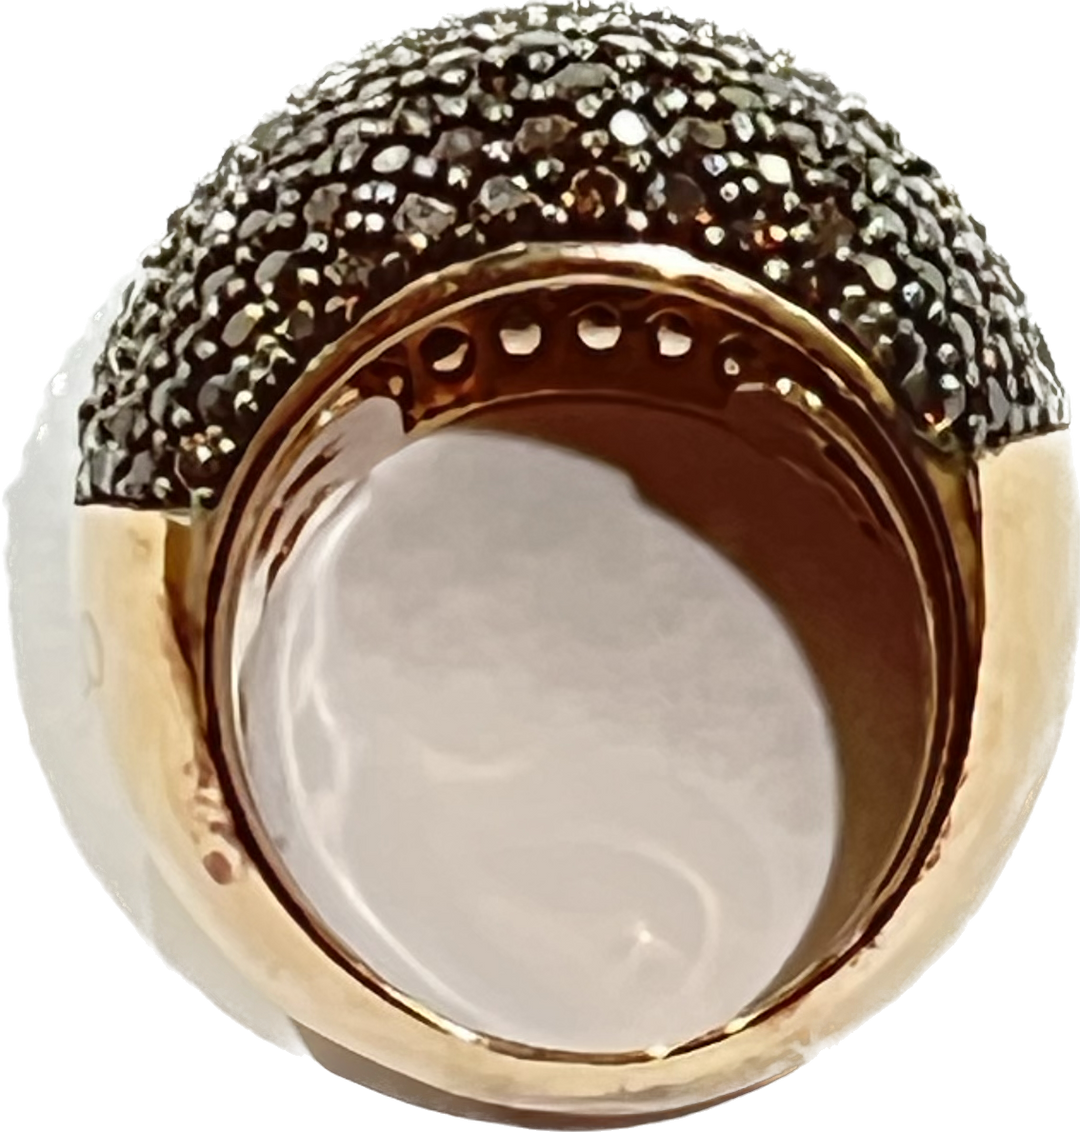 Sidalo anello Pavè Brown argento 925 finitura PVD oro rosa cubic zirconia M4425-BW